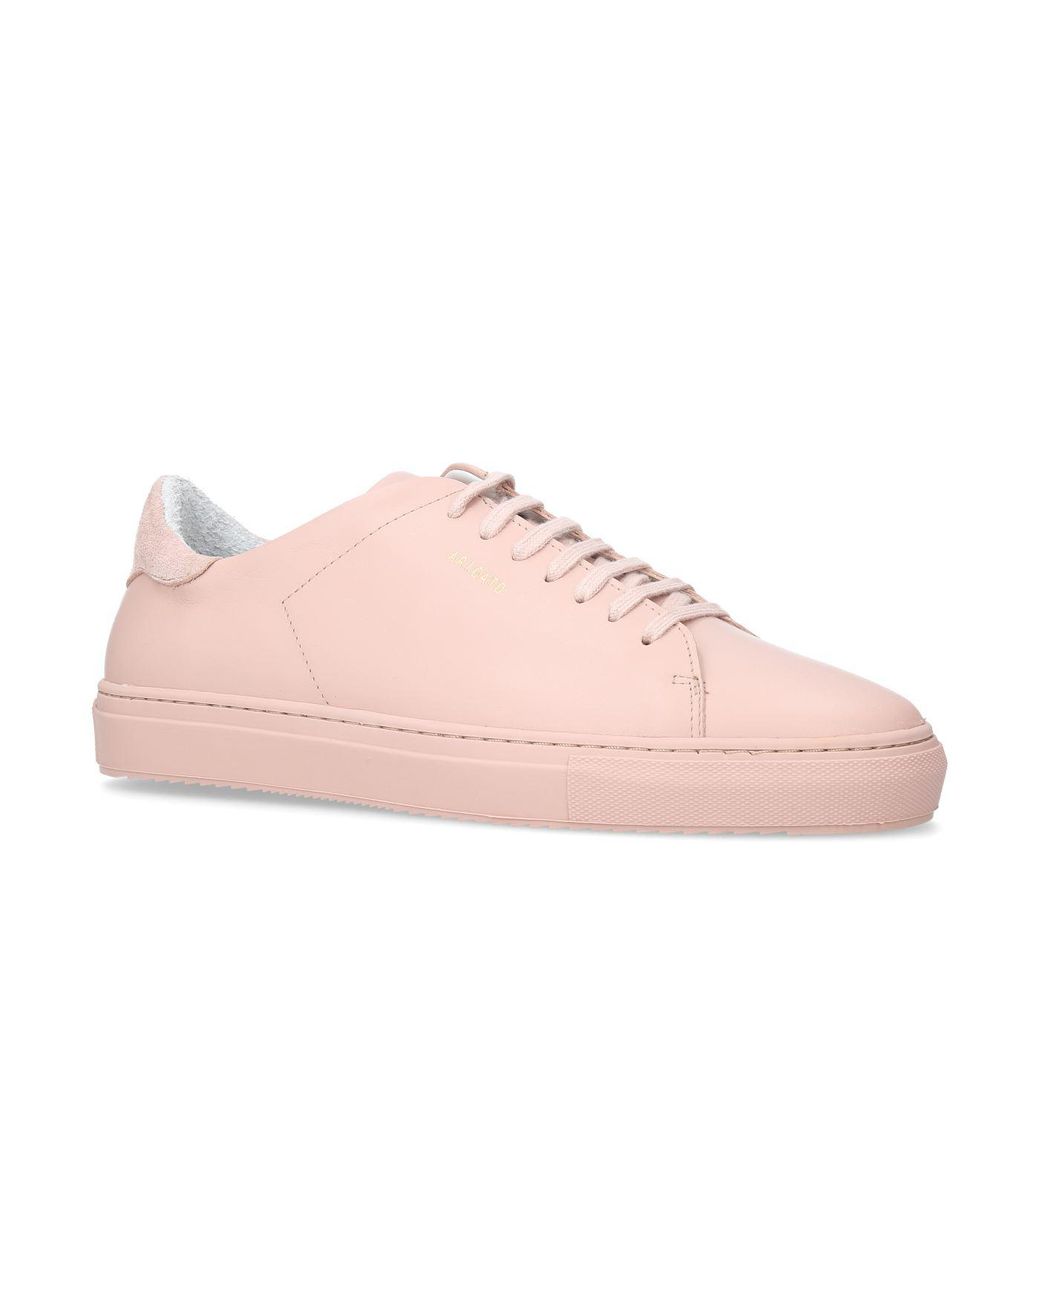 Axel Arigato Clean 90 Sneakers, Pink, Uk 12 | Lyst